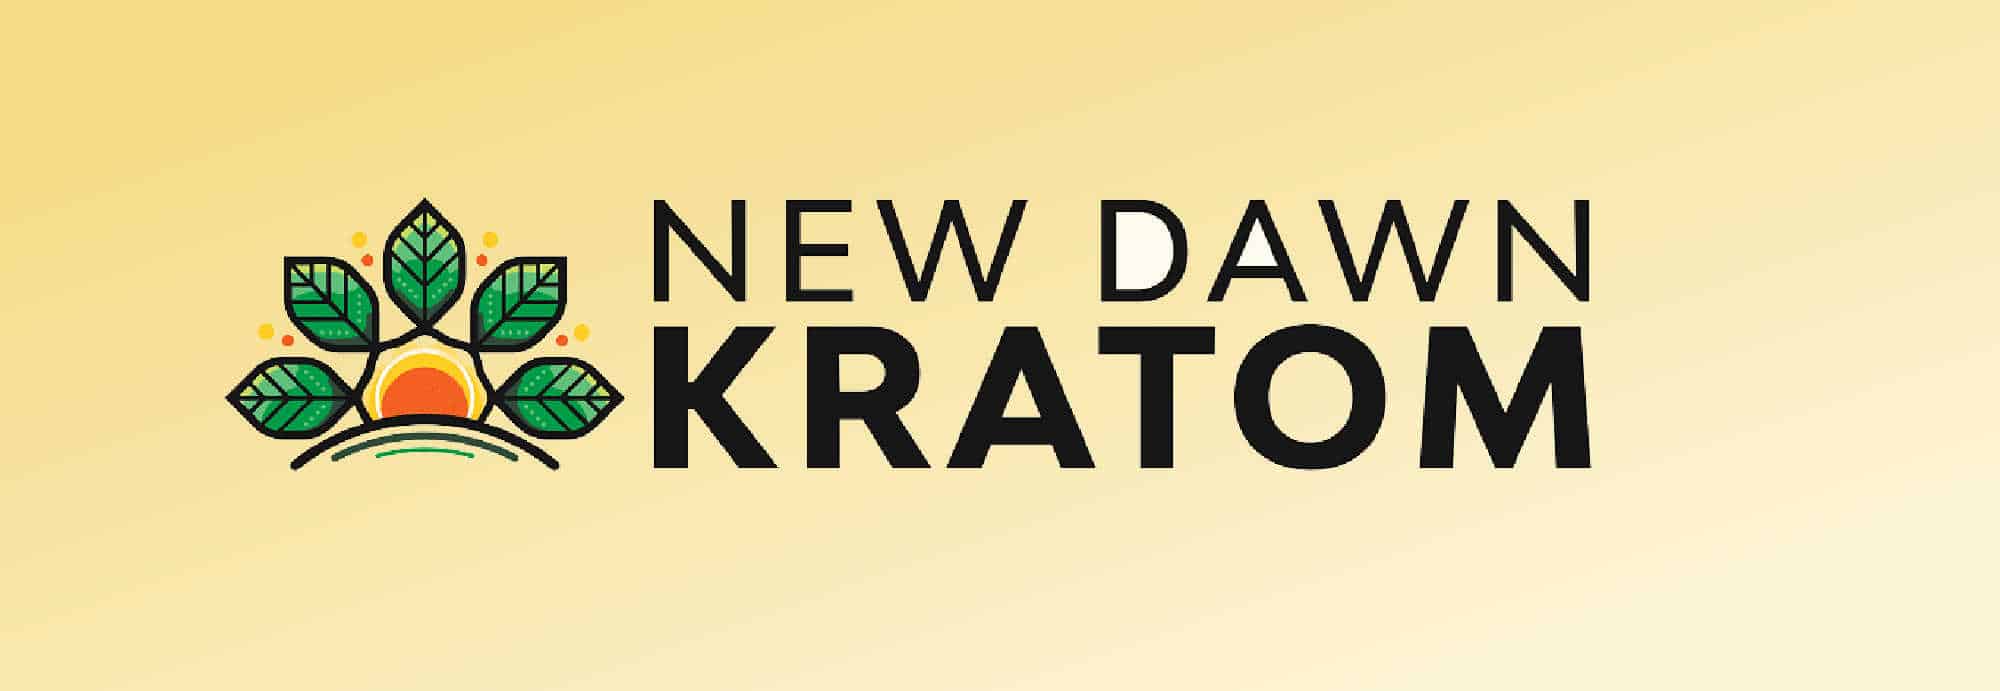 image of new dawn kratom logo